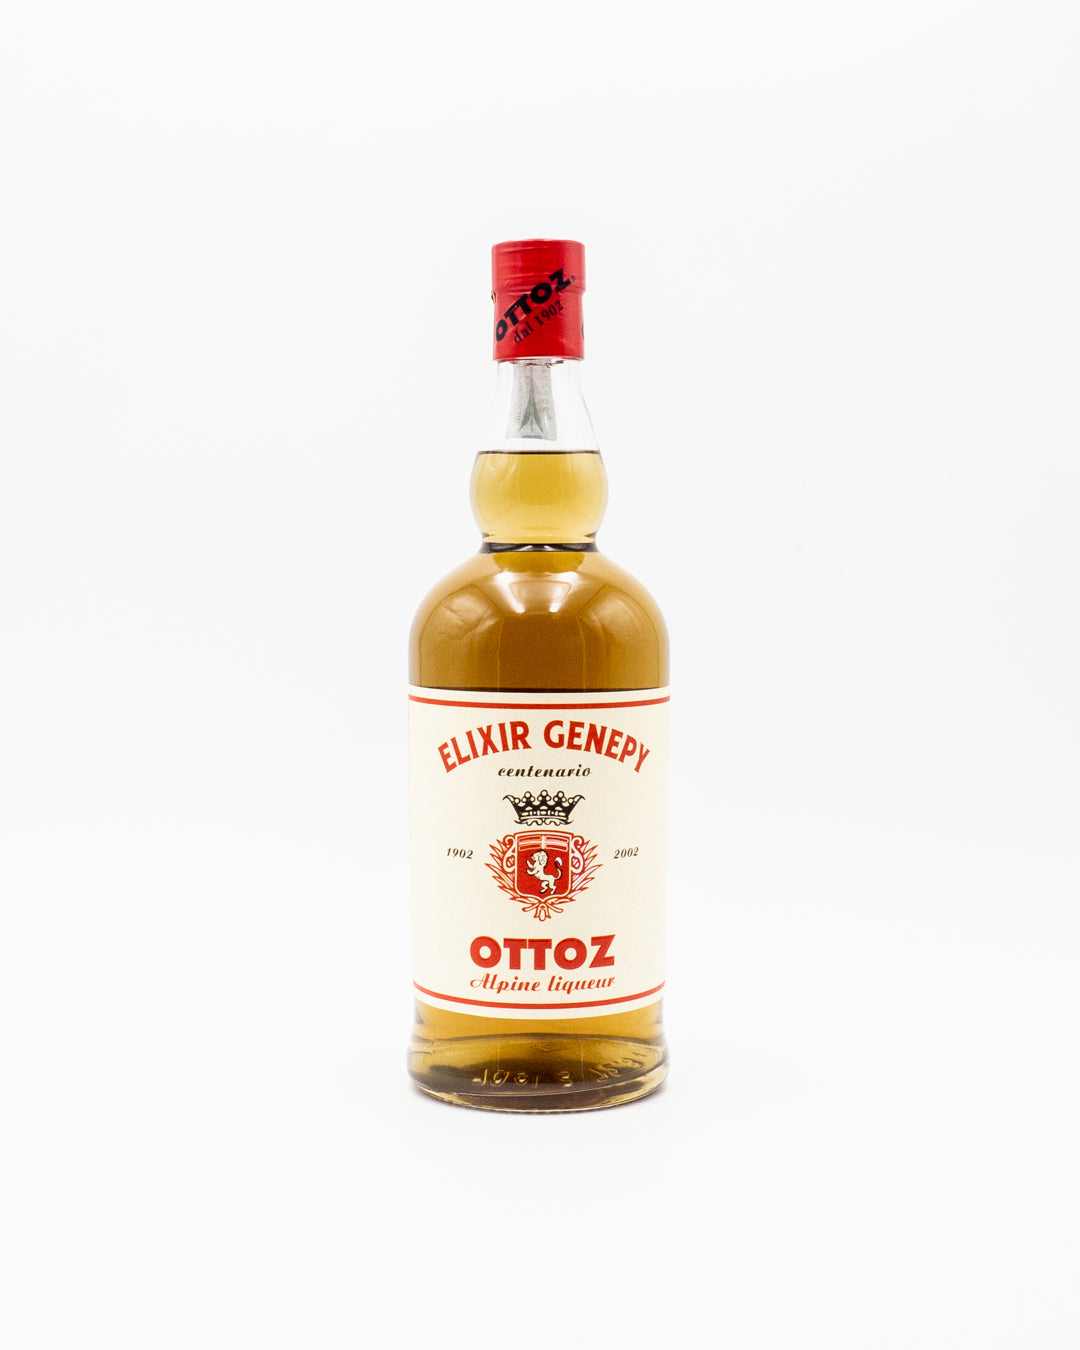 liquore-elixir-genepy-centenario-ottoz-38-0-70l